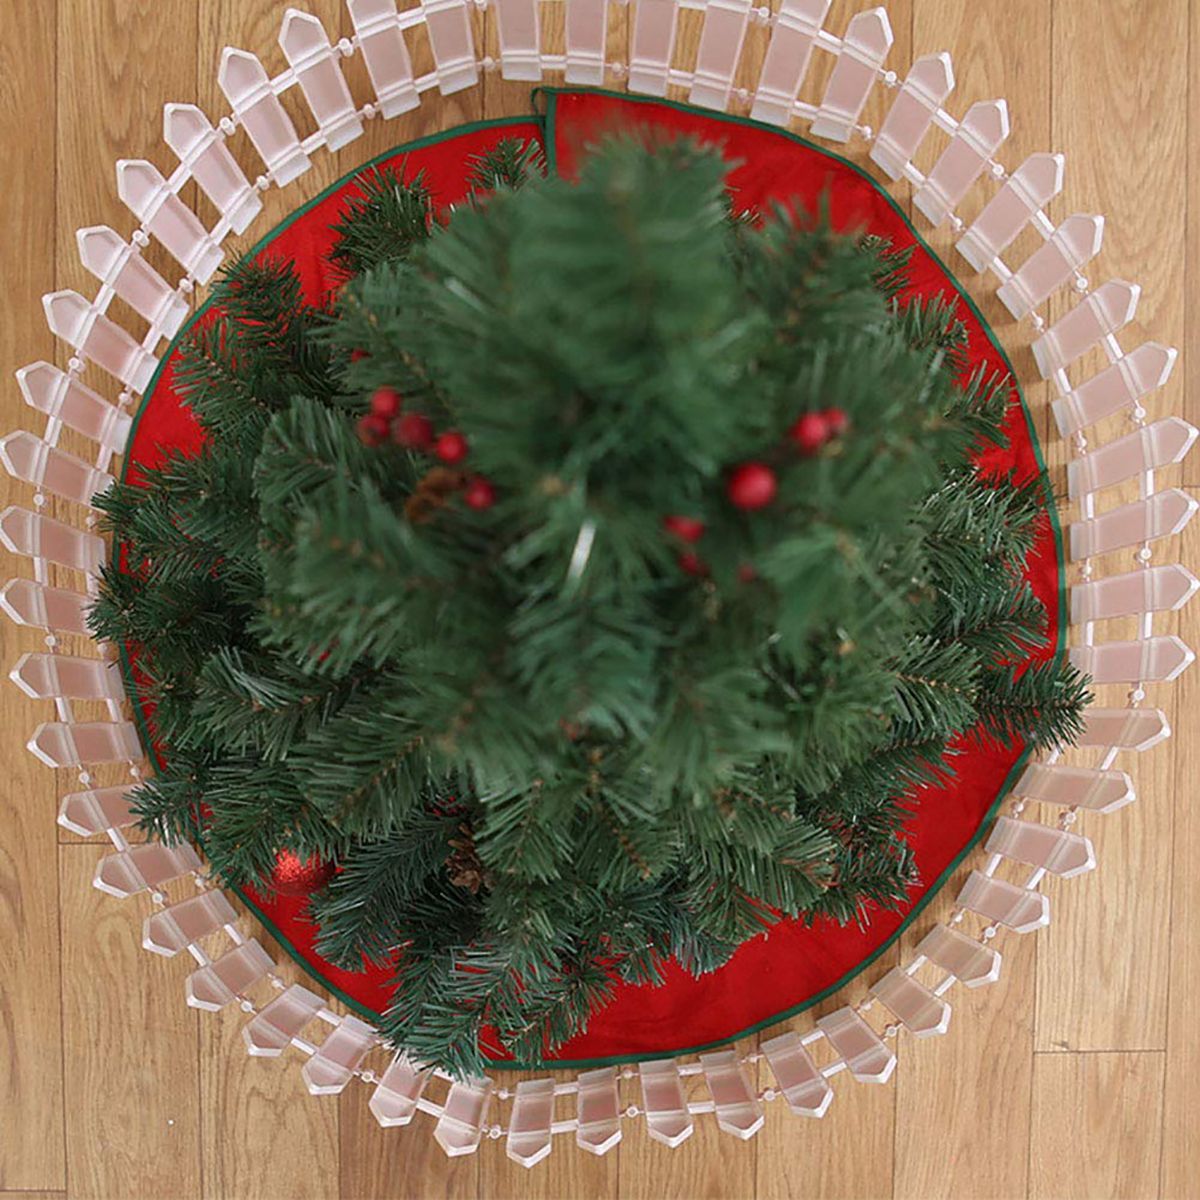 12PCS-Plastic-Fence-Decorations-White-Home-Christmas-Xmas-Tree-Ornaments-Miniature-Border-Grass-Lawn-1557020